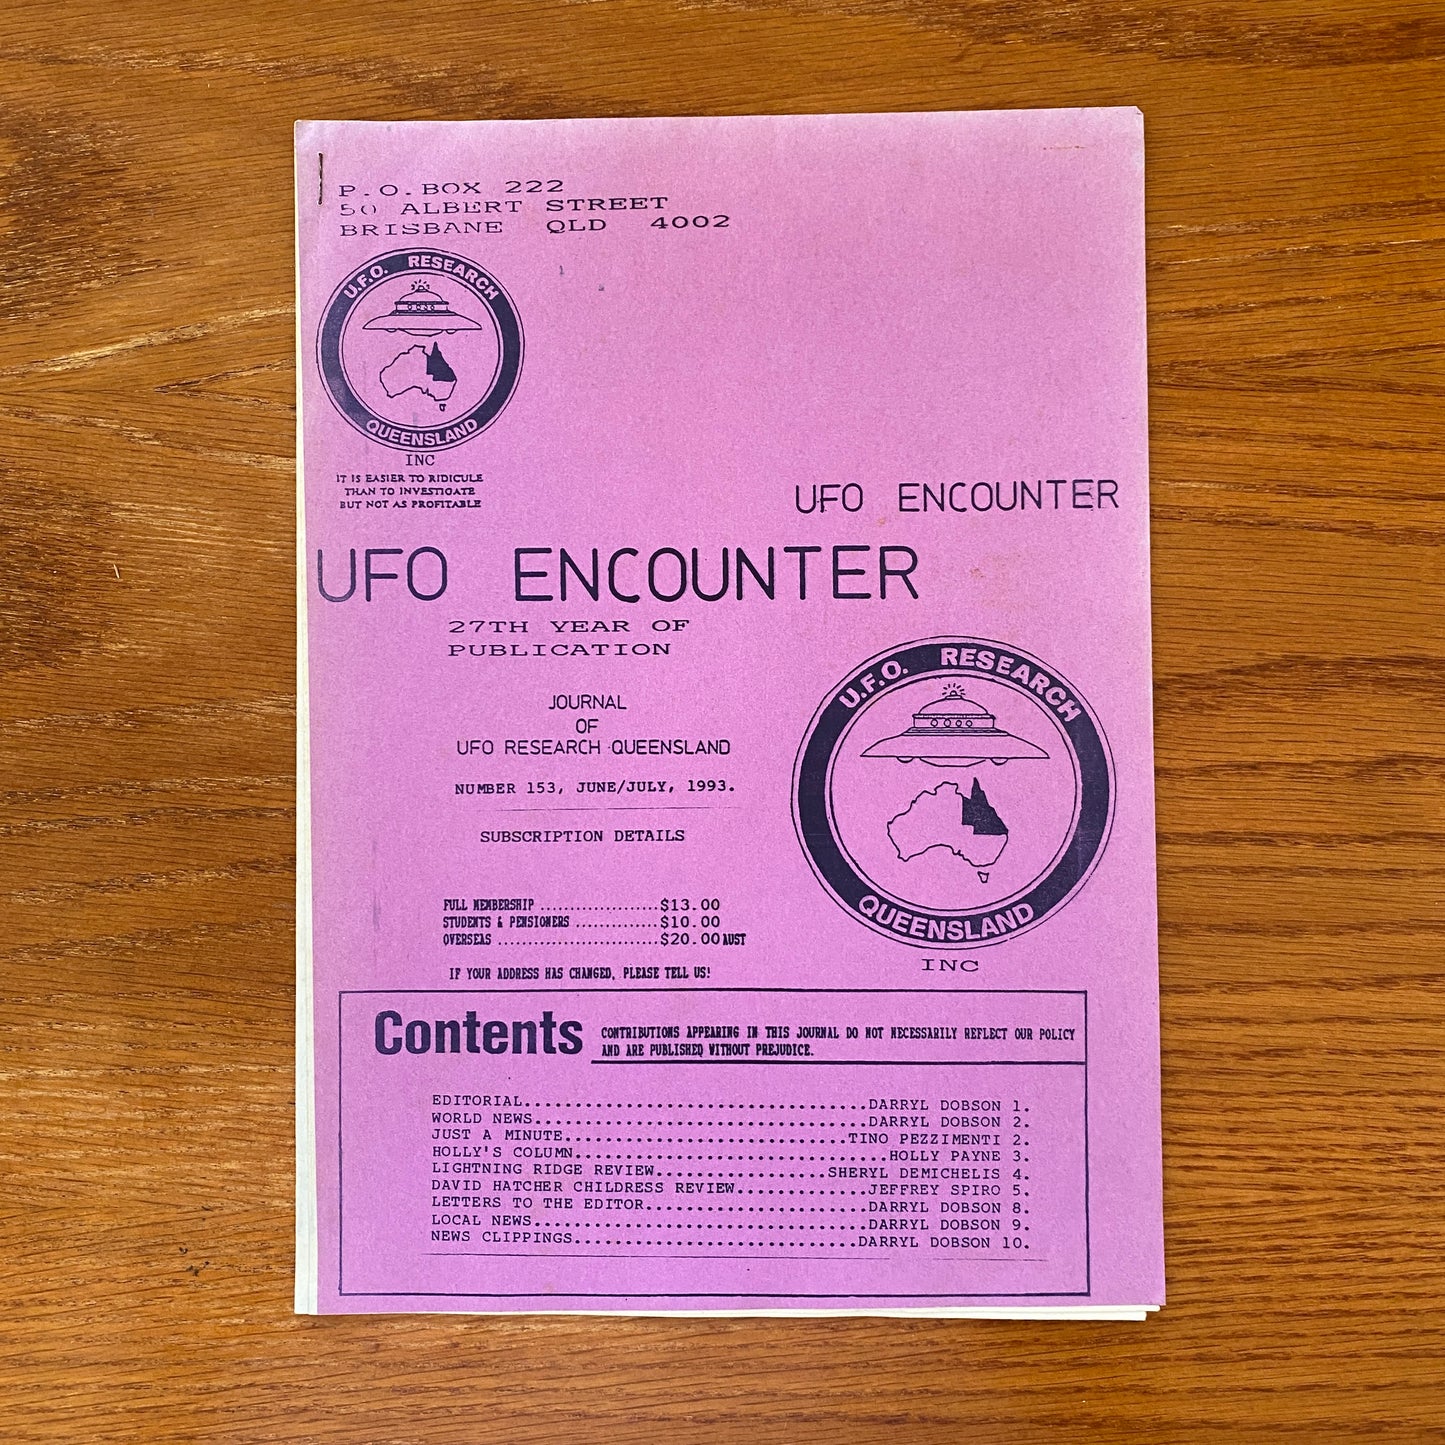 UFO Encounter